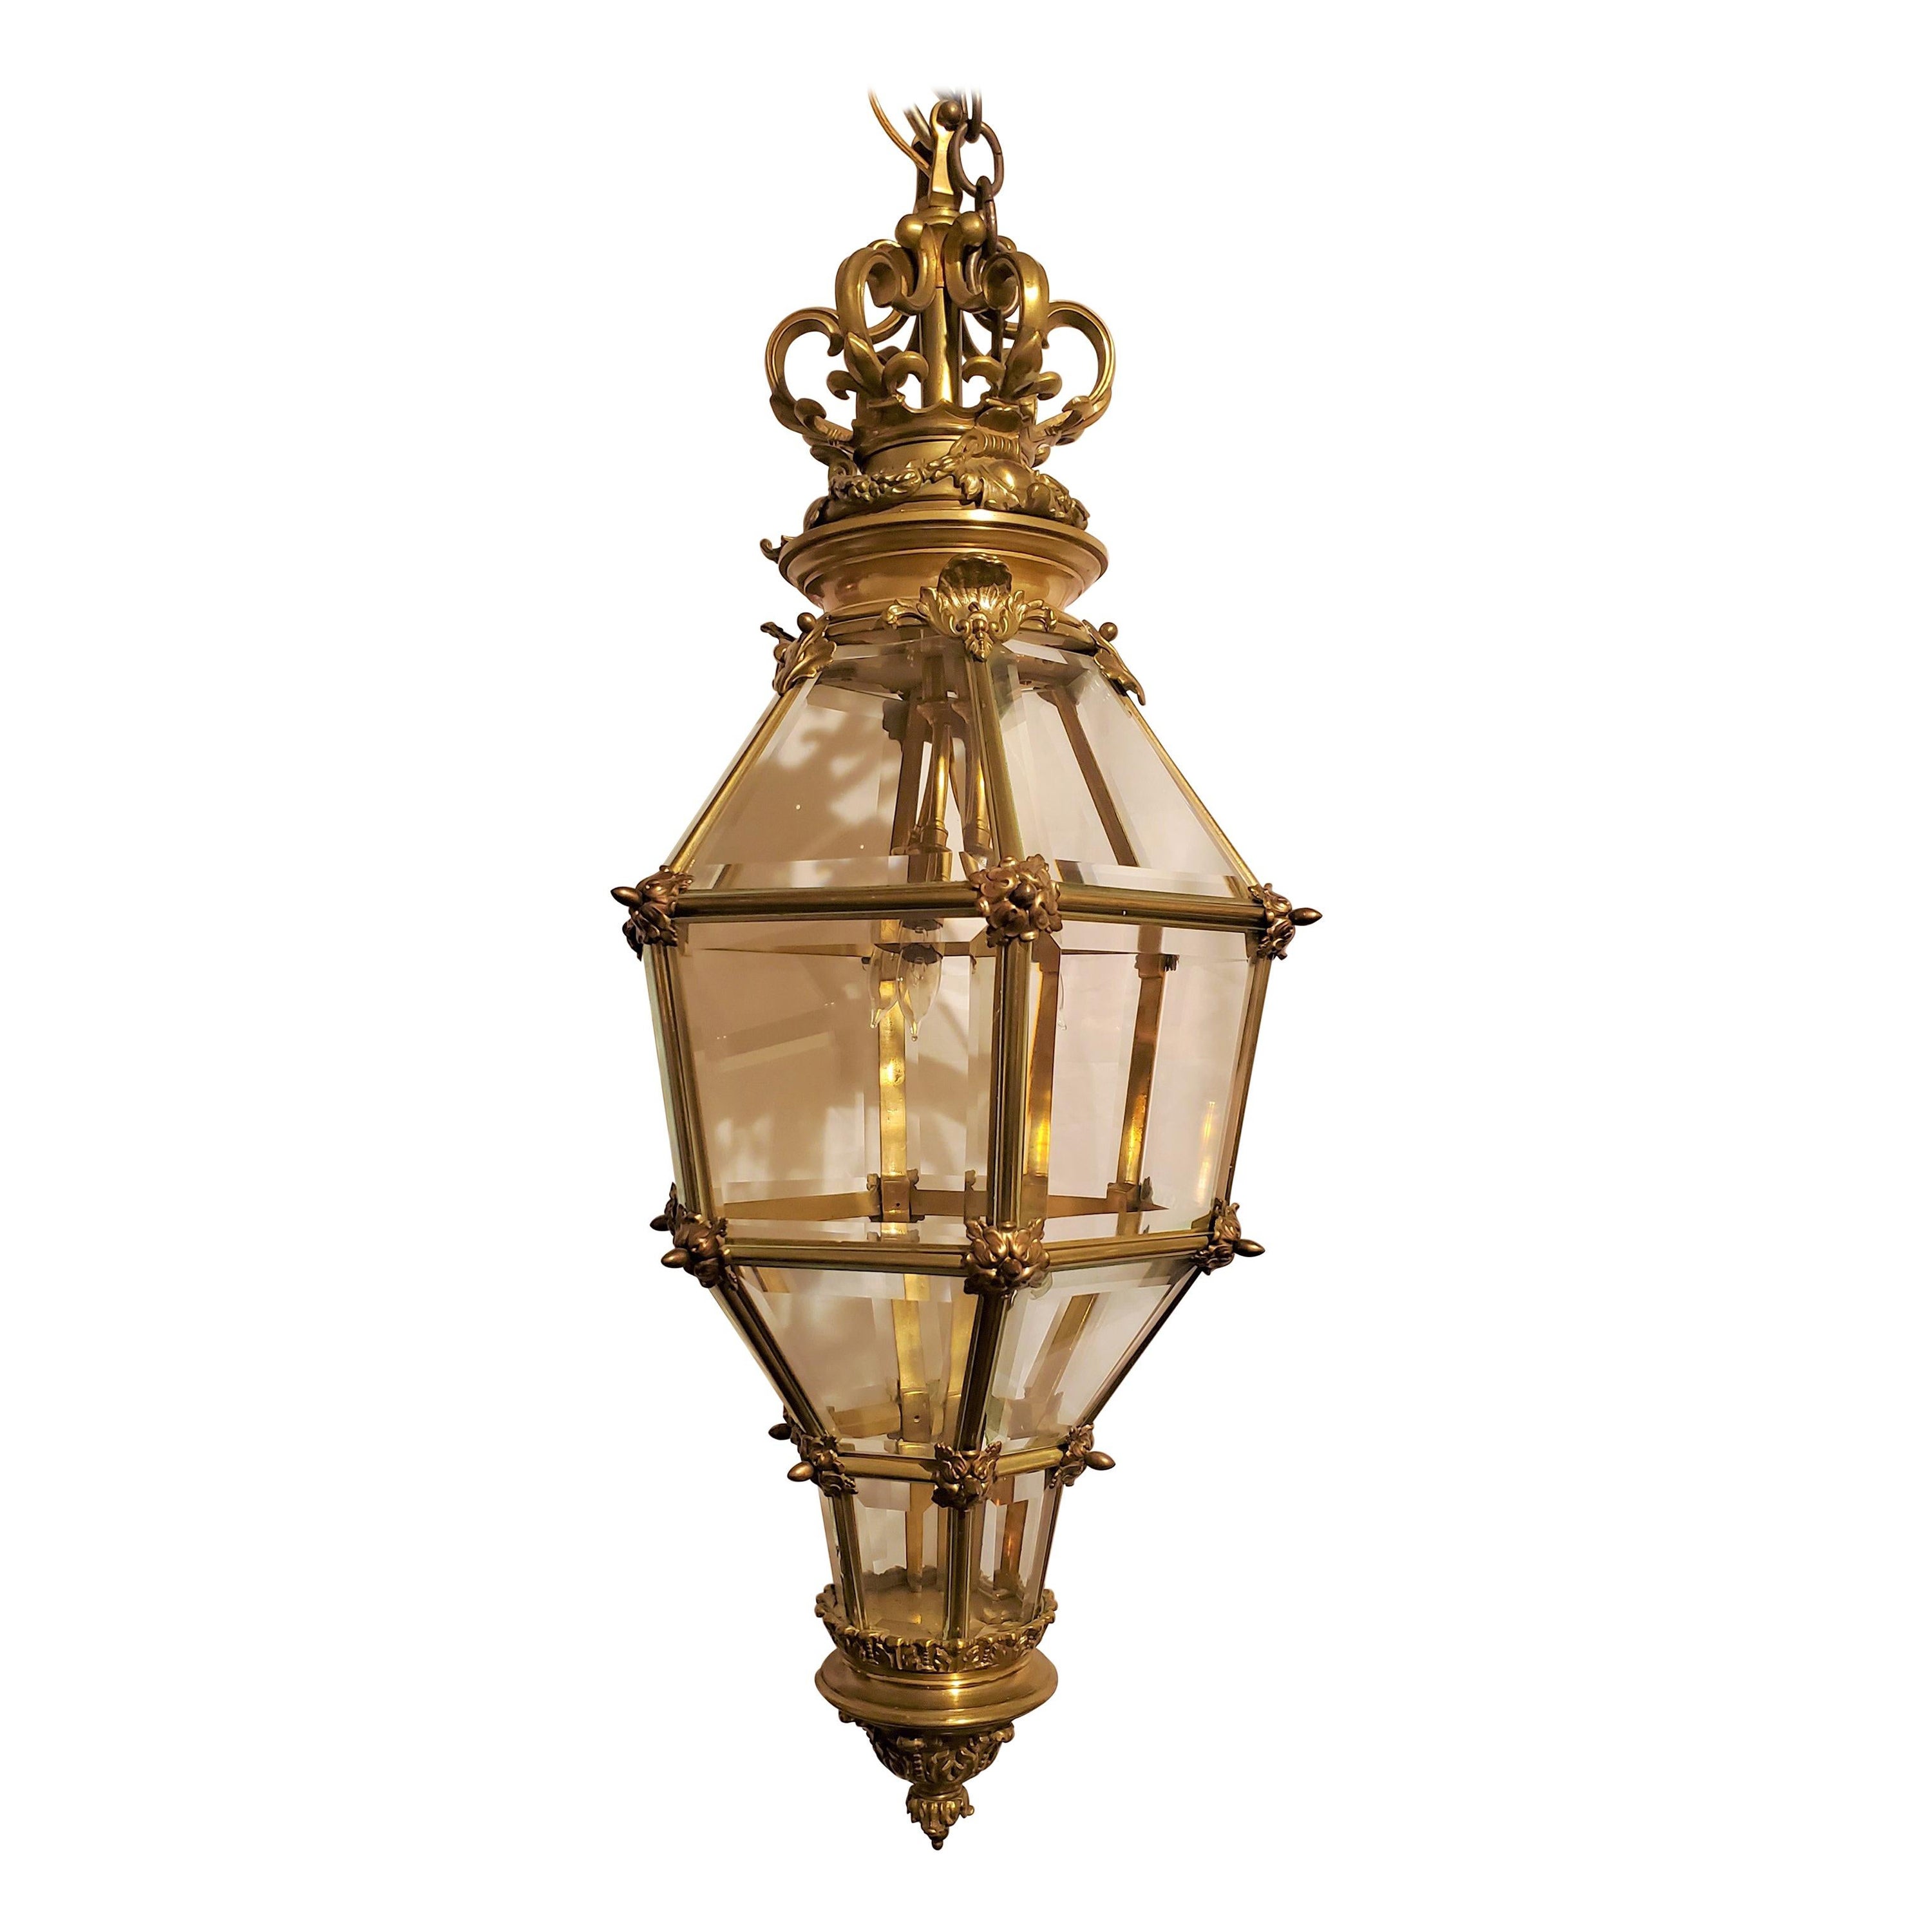 Antique French Bronze and Beveled Glass 3-Light Glass Lantern, circa 1890